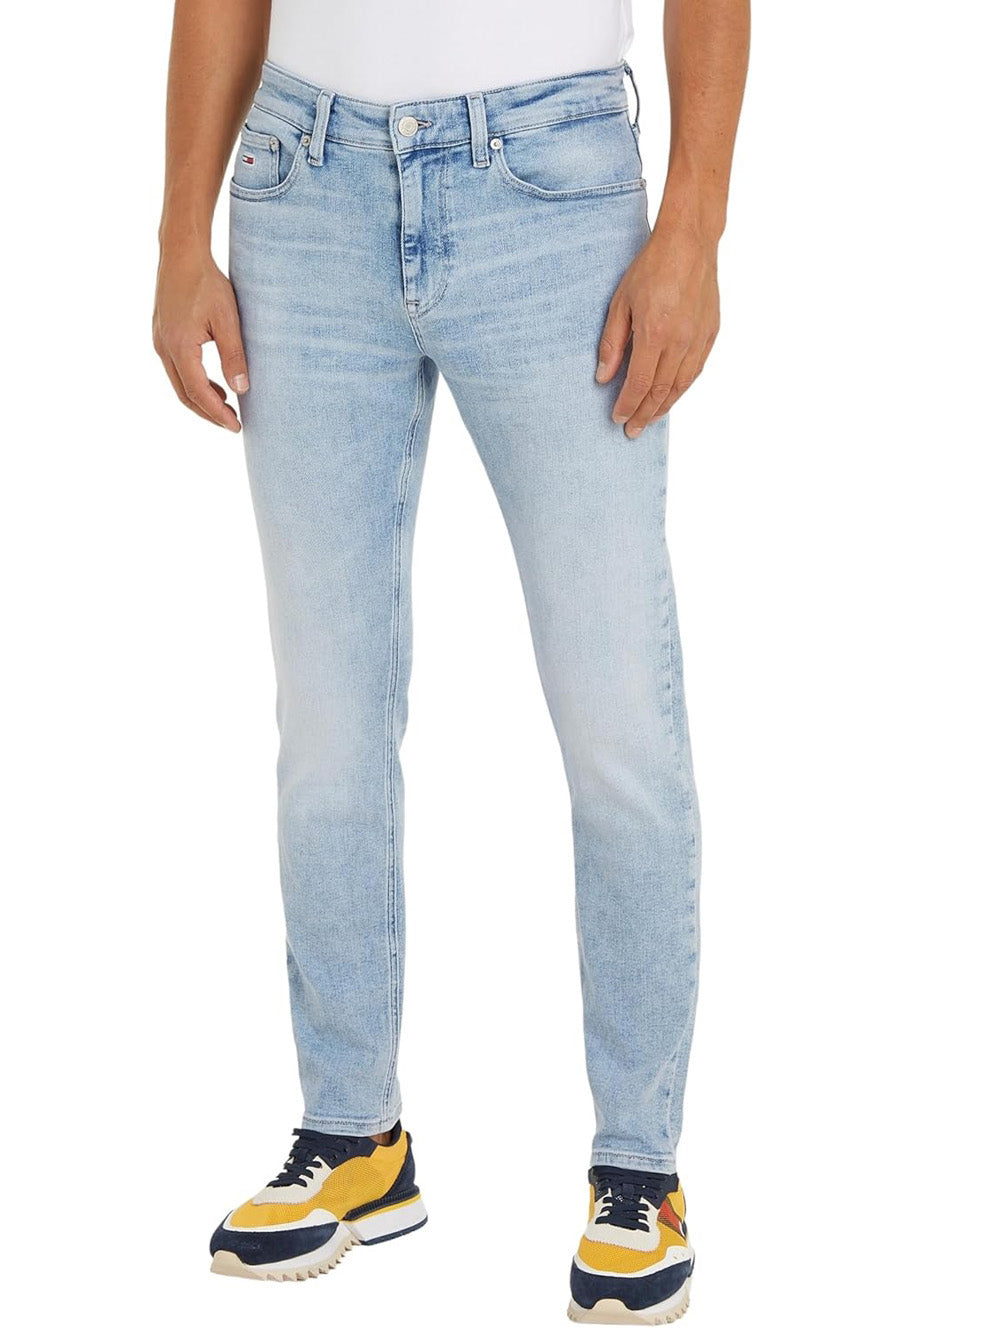 TOMMY HILFIGER Jeans Uomo - Blu modello DM0DM18727